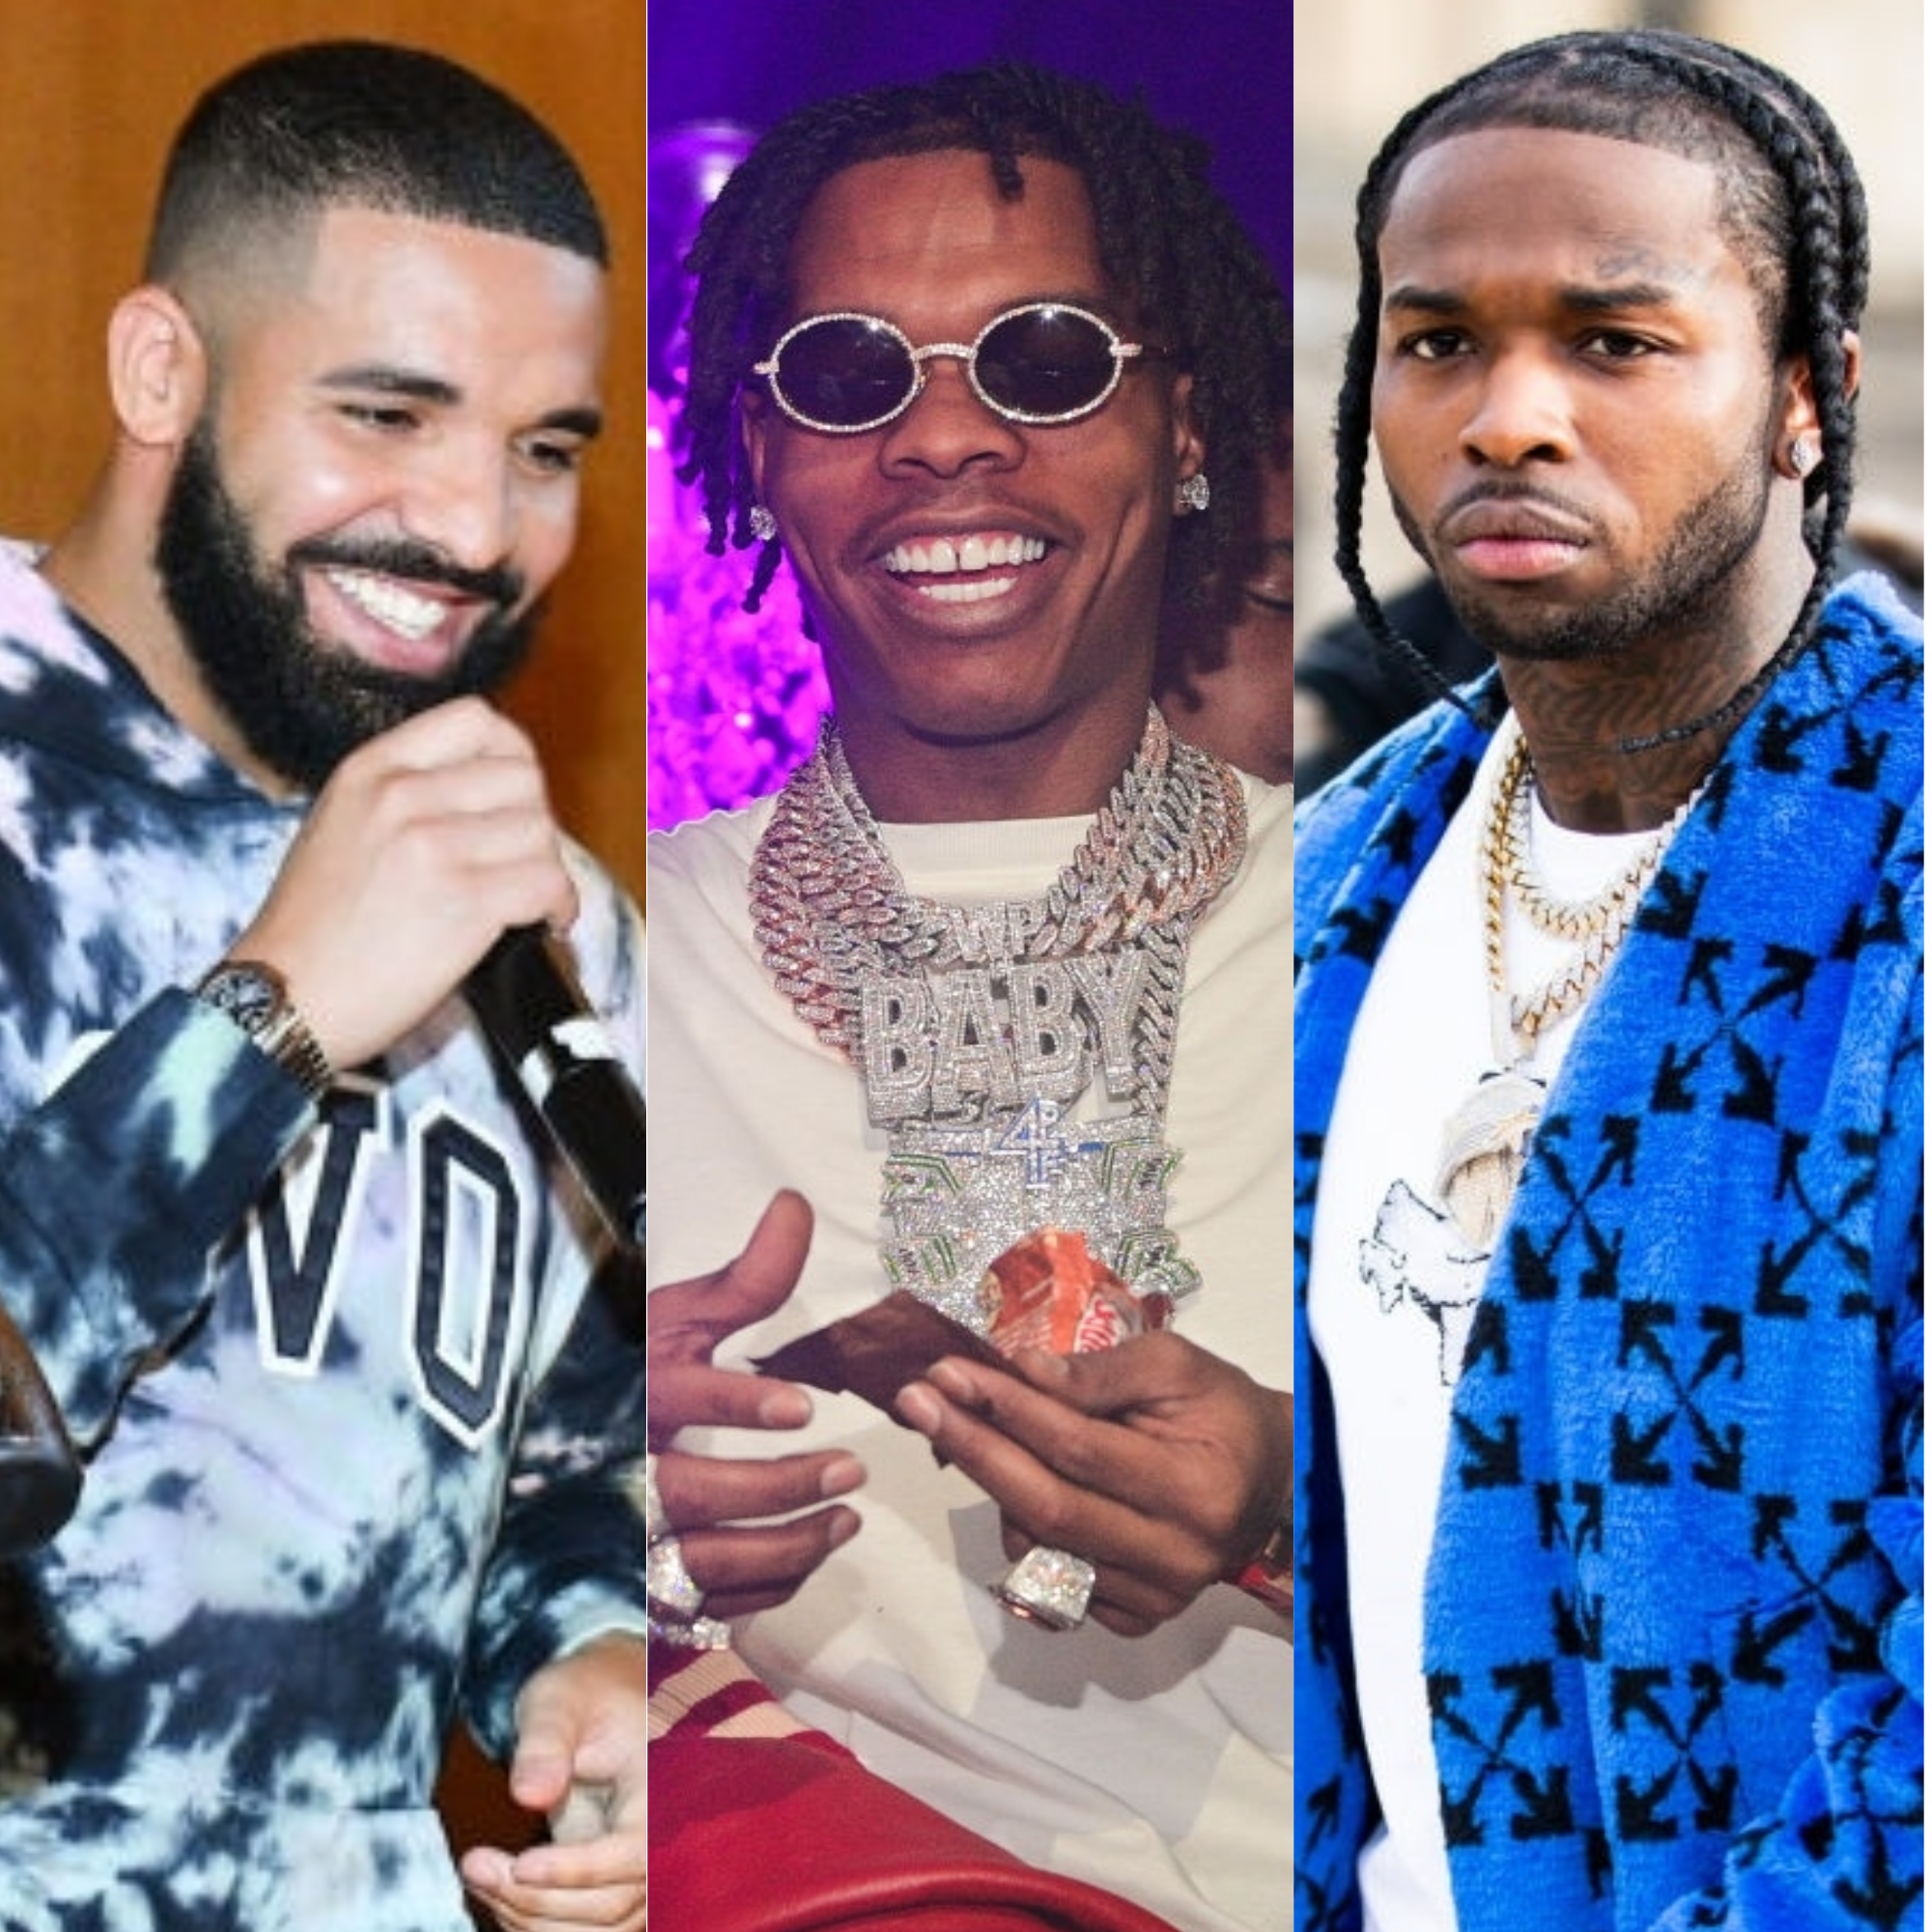 HNHH Staff Picks Playlist: Drake, Lil Baby, Pop Smoke, & More